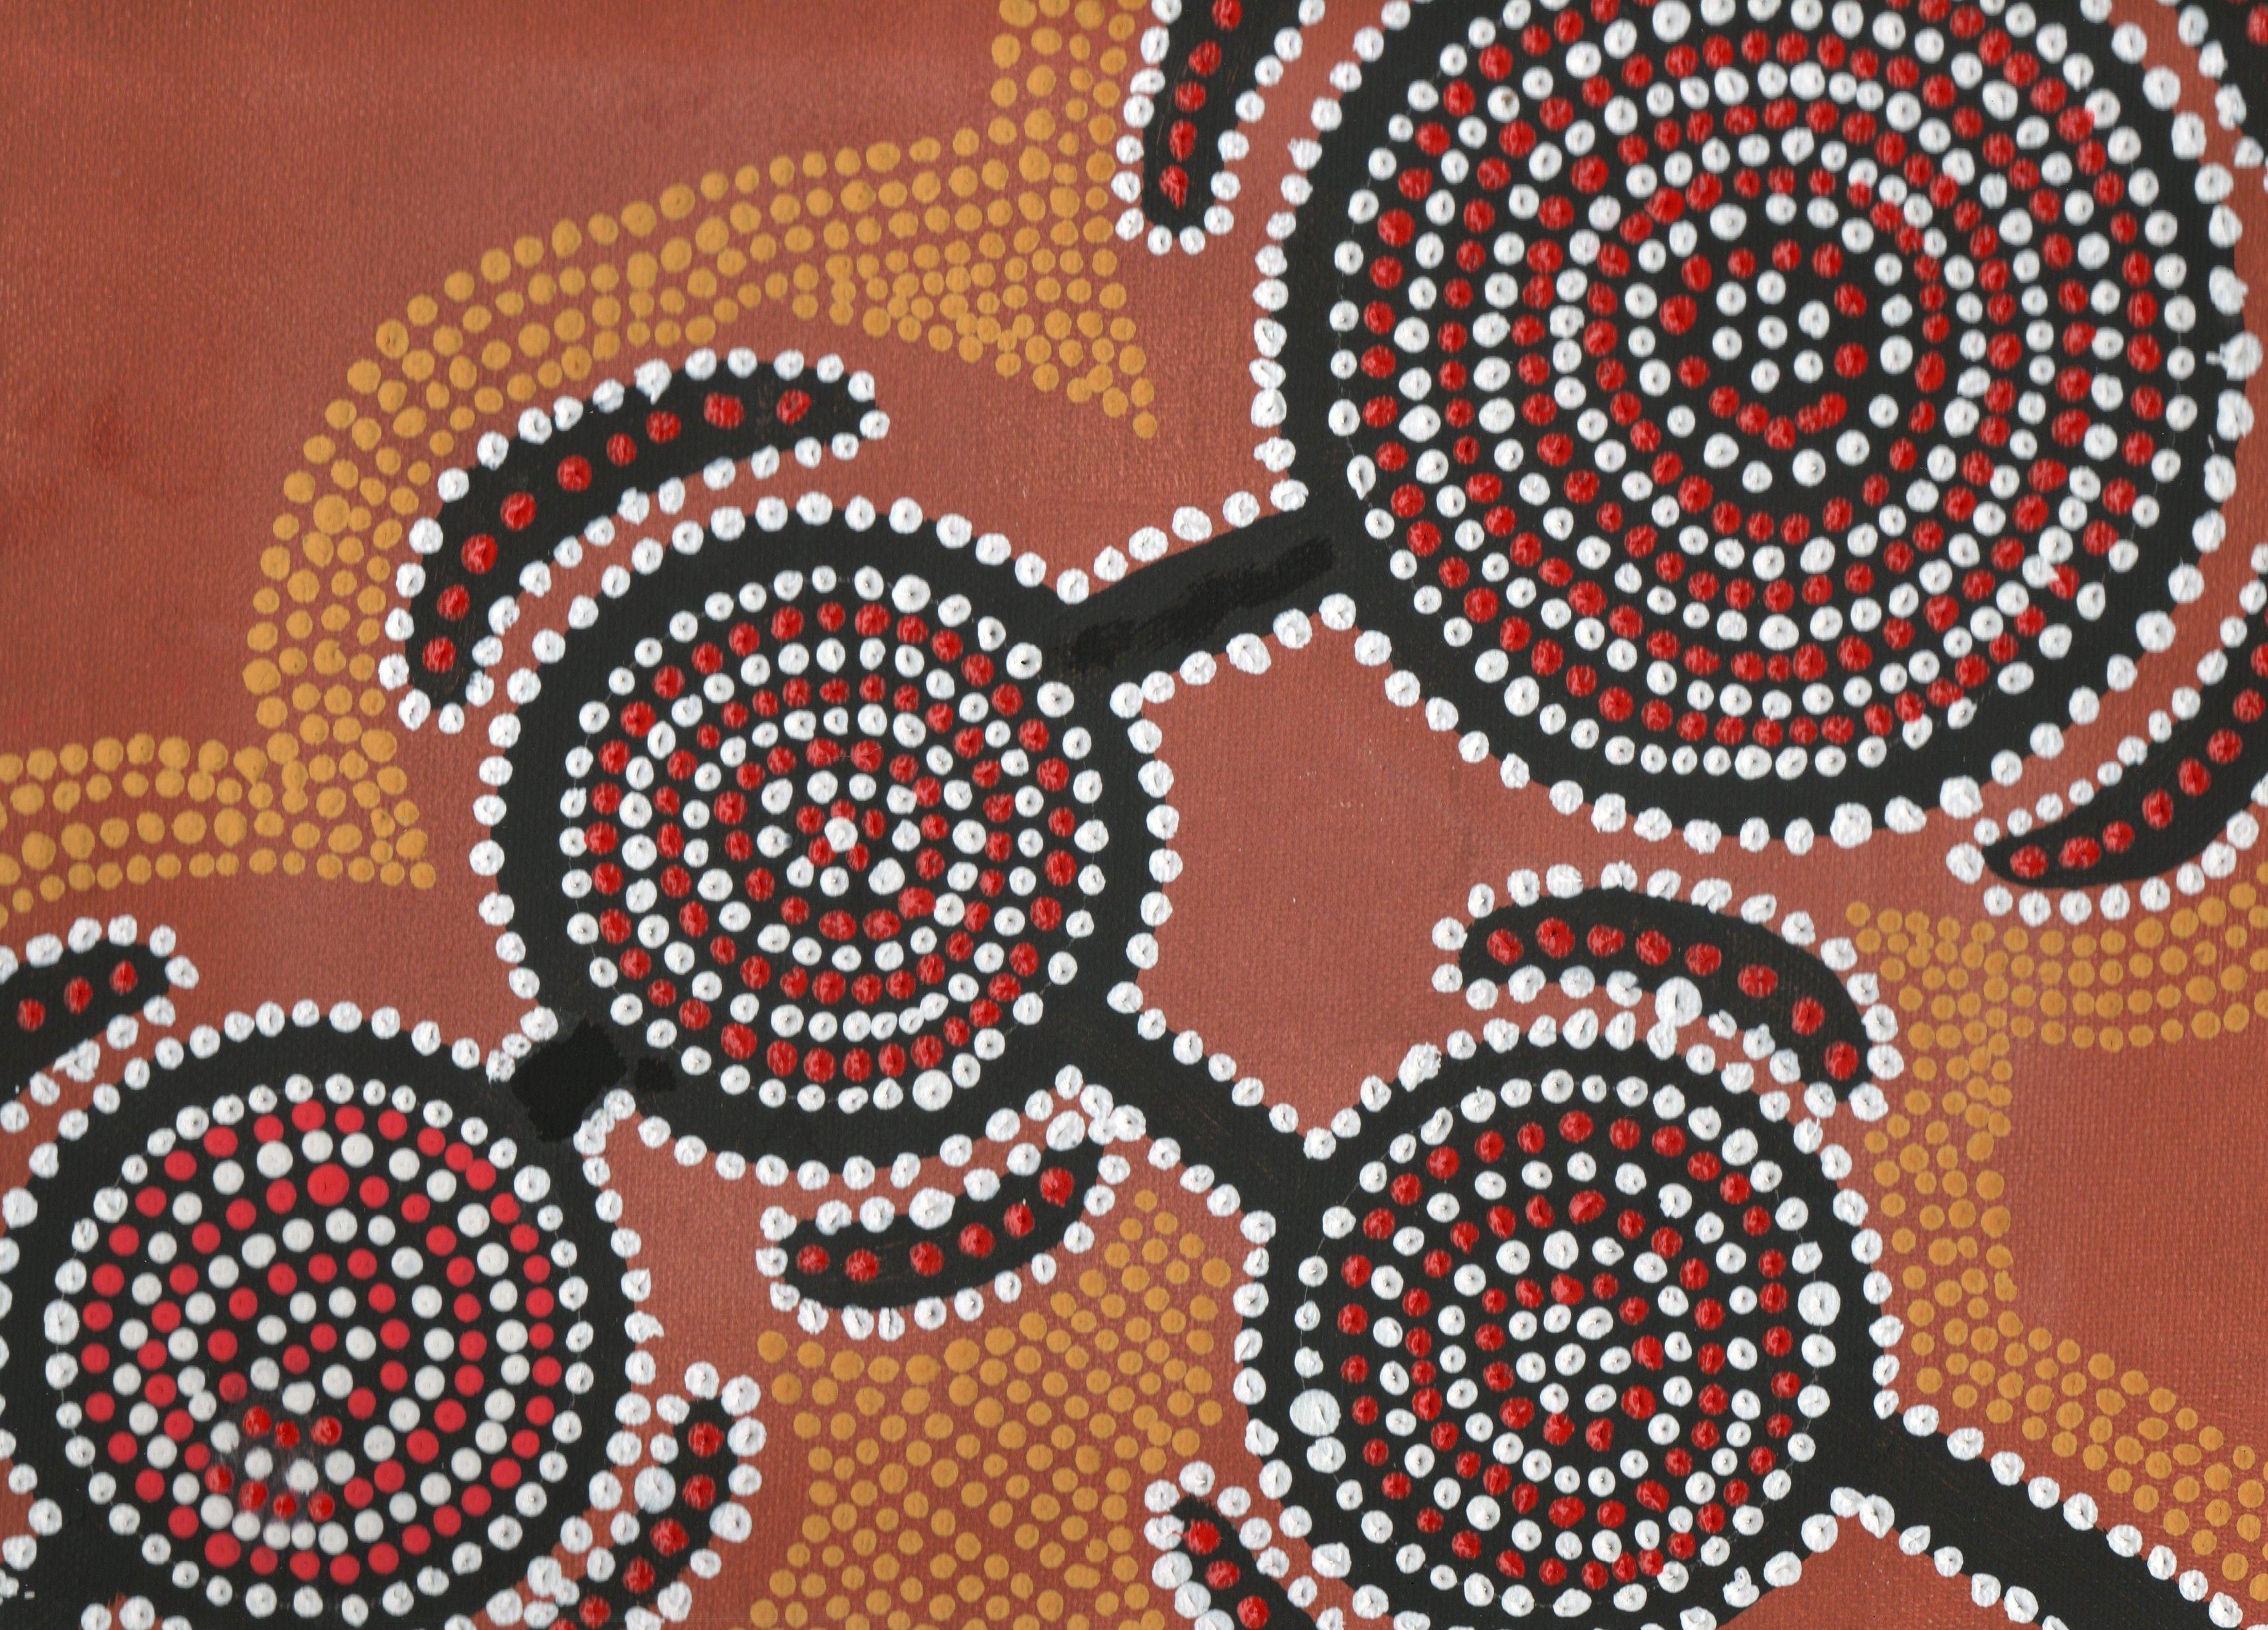 Behind the dots of Aboriginal Art